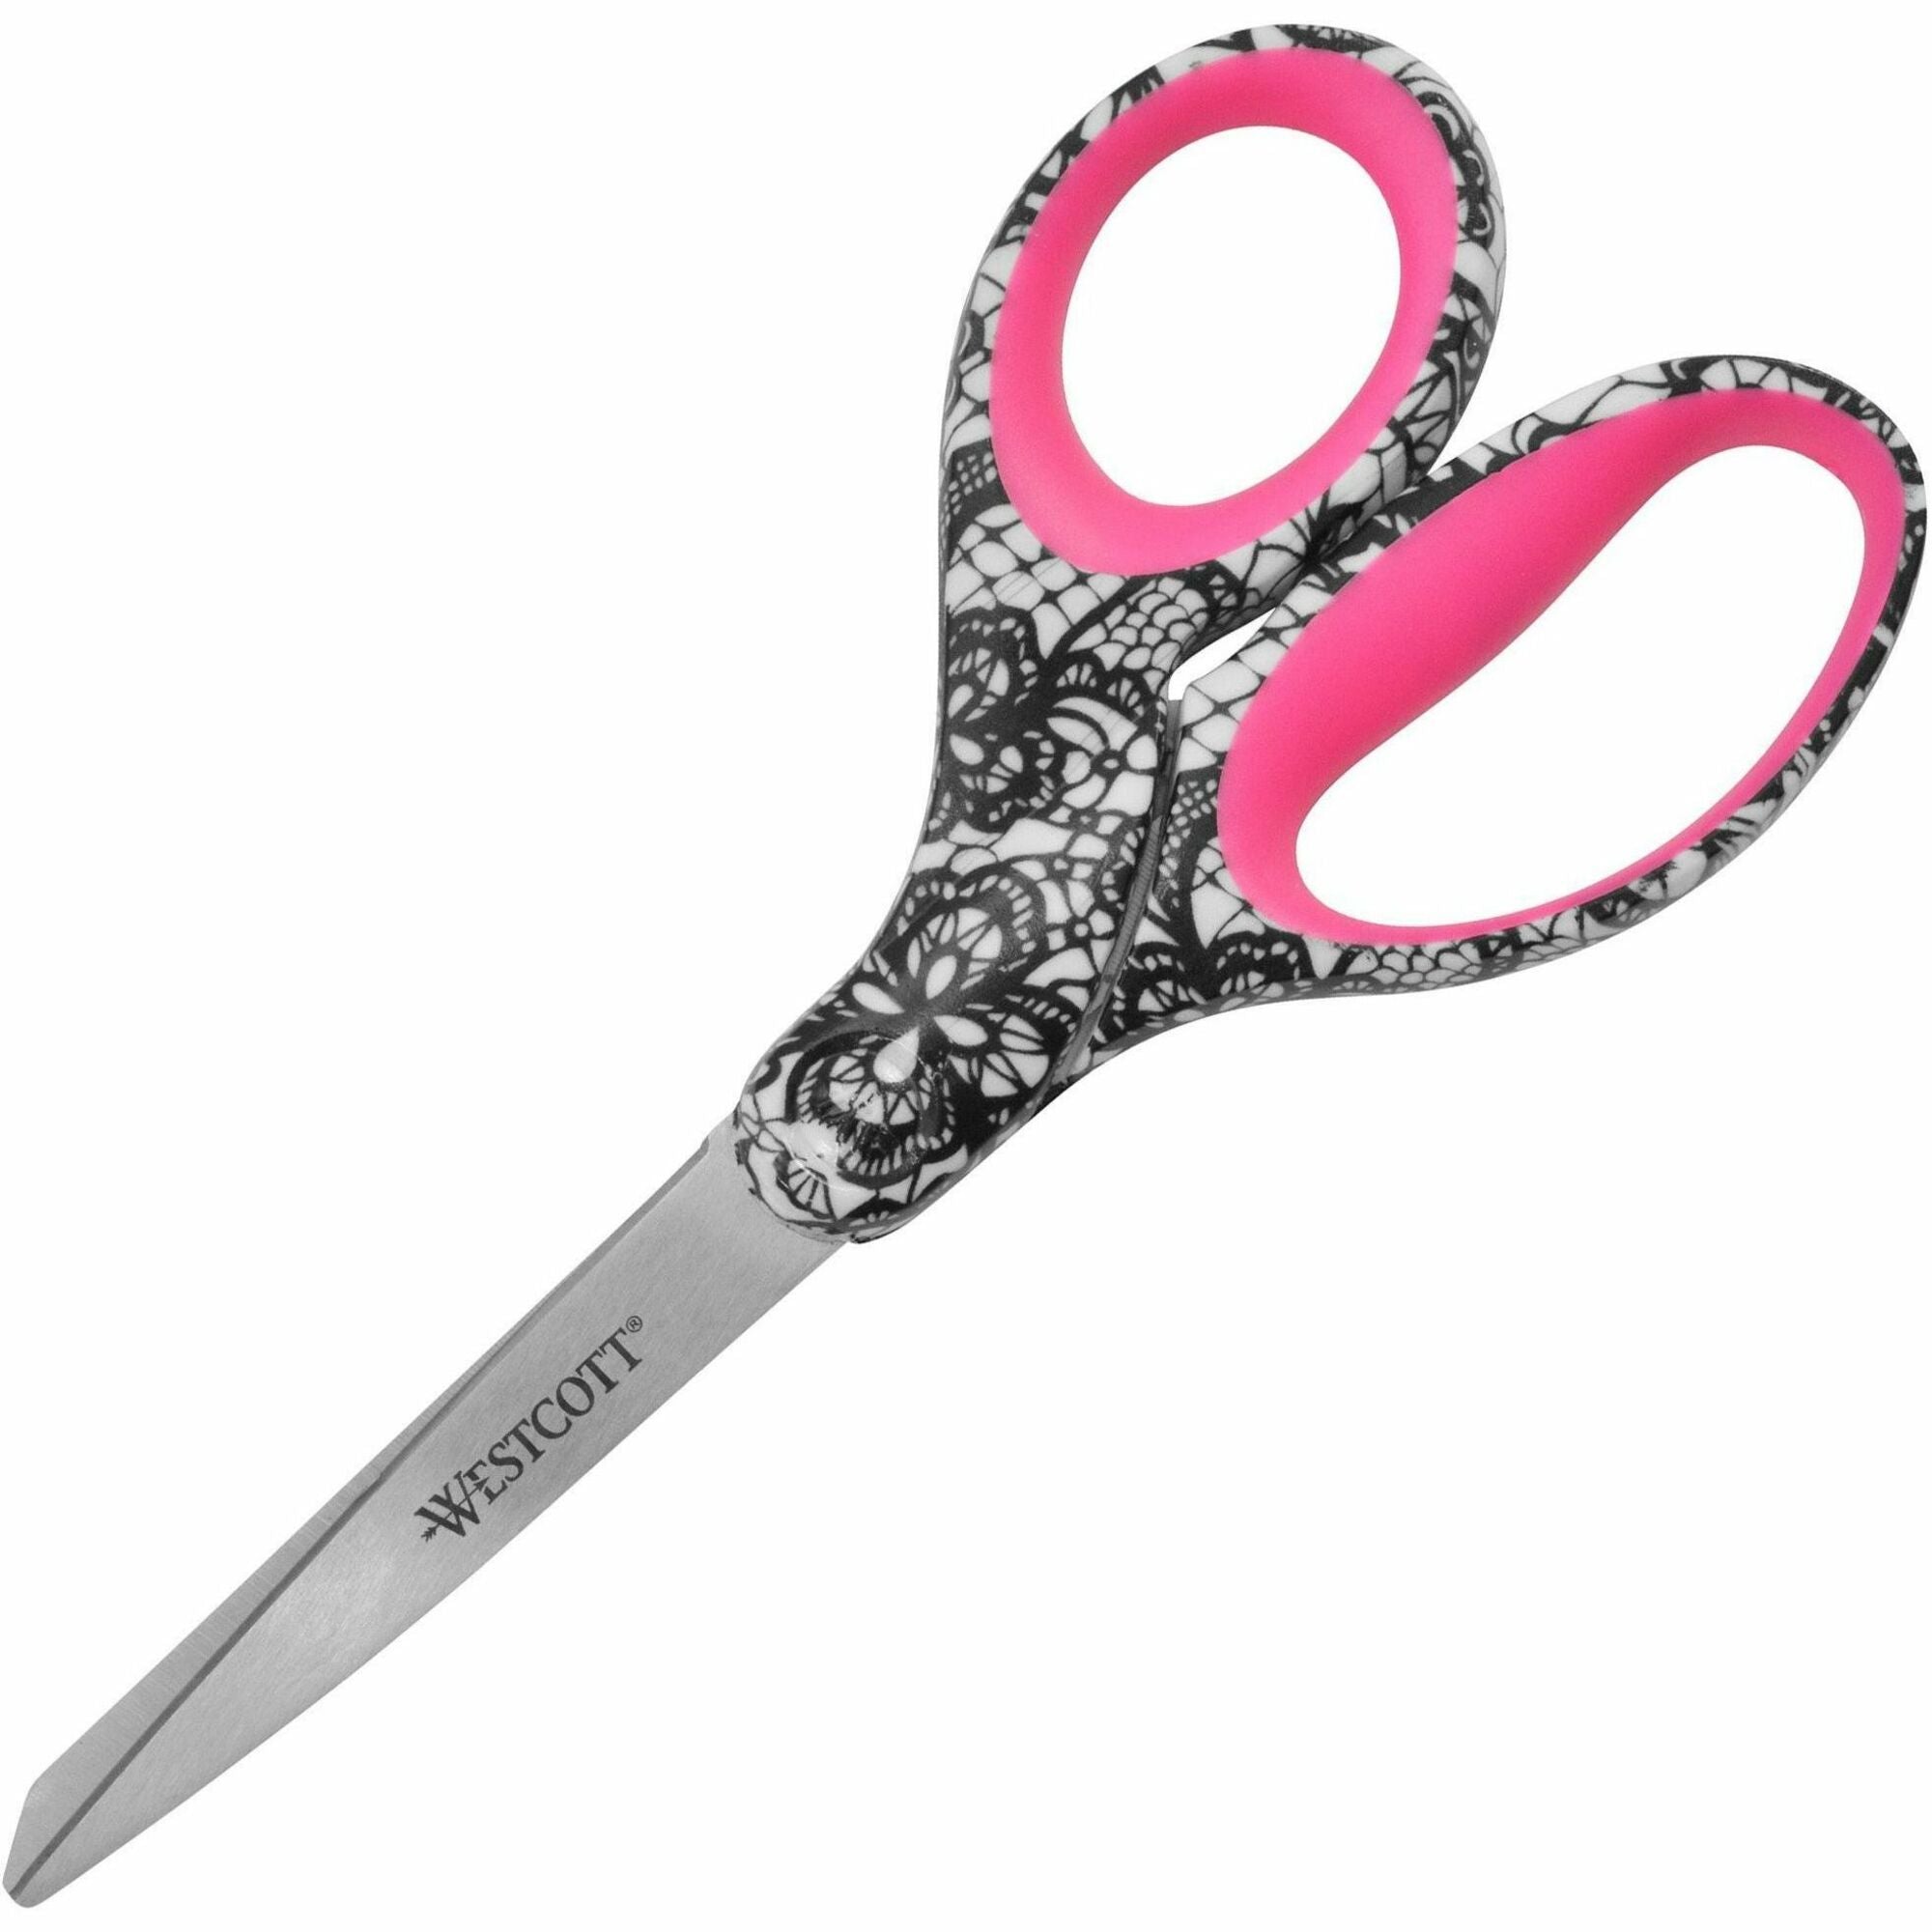 westcott-8-fashion-scissors-8-overall-length-left-right-stainless-steel-multi-1-each_acm16660 - 1